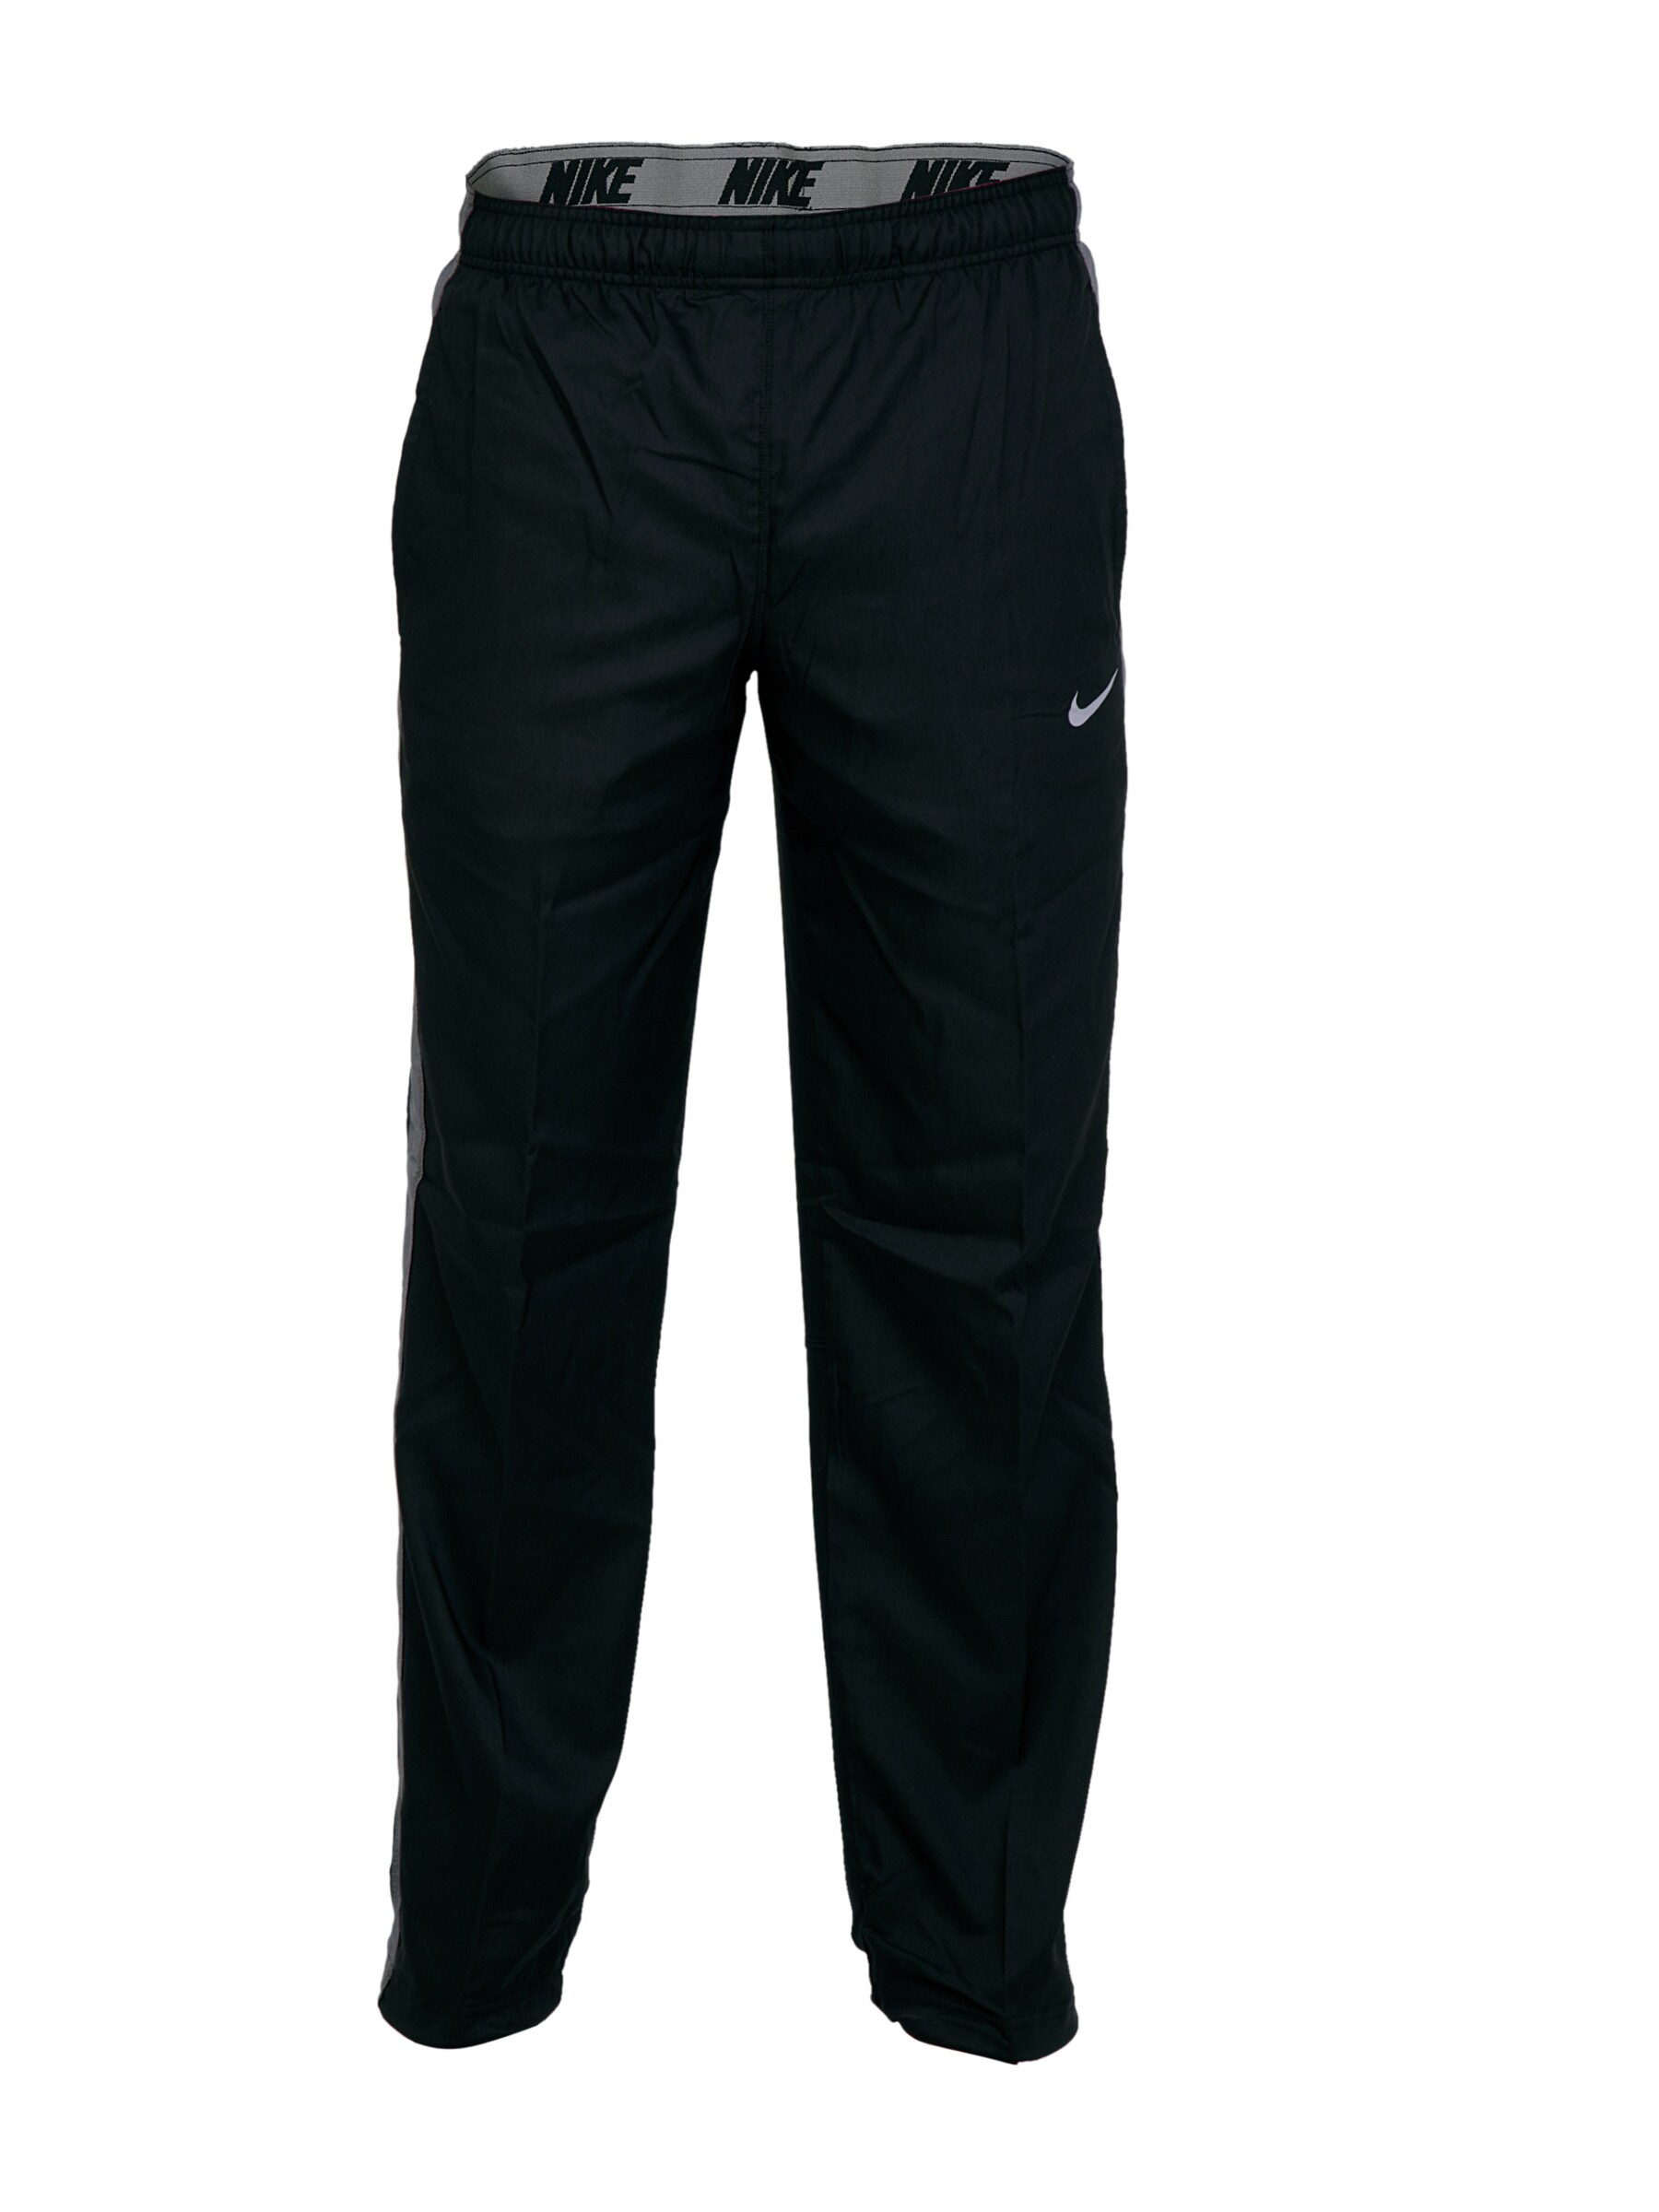 Nike Men AS Team Woven Black Track Pants